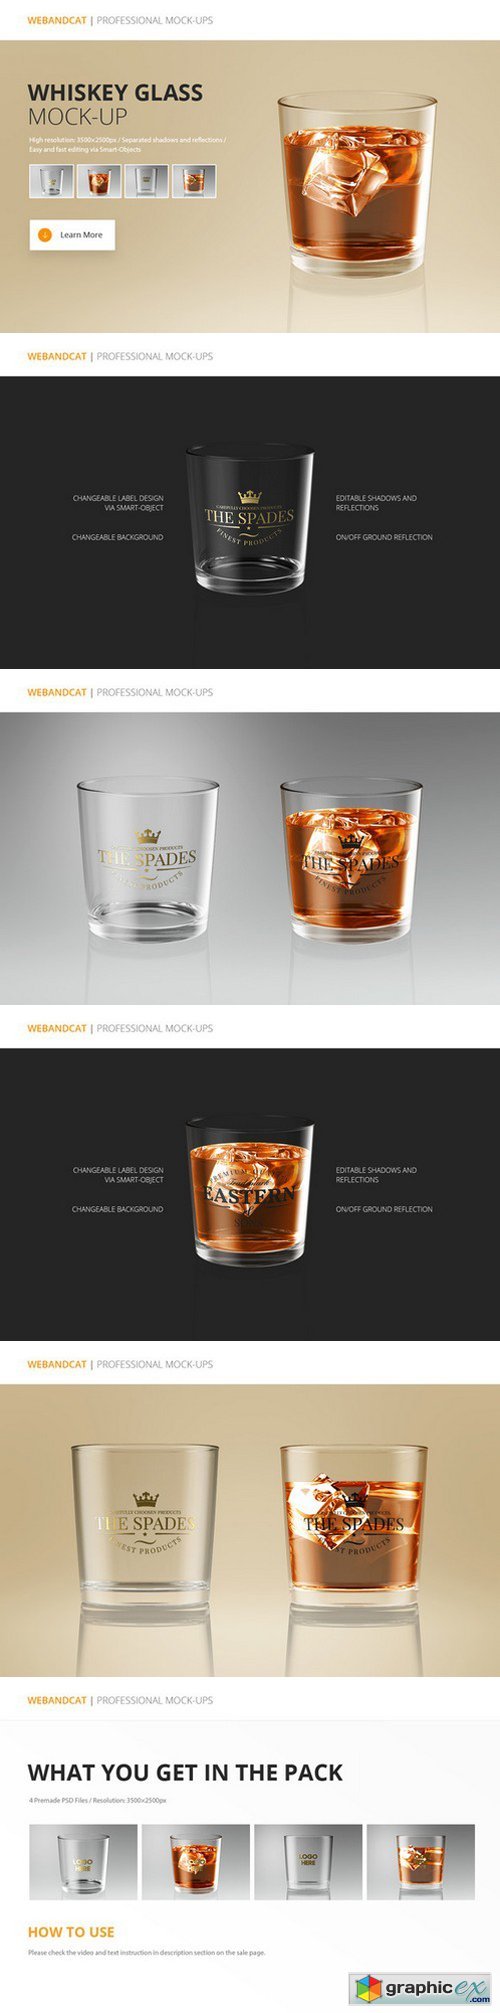 Glass Mockup - Whiskey Glass